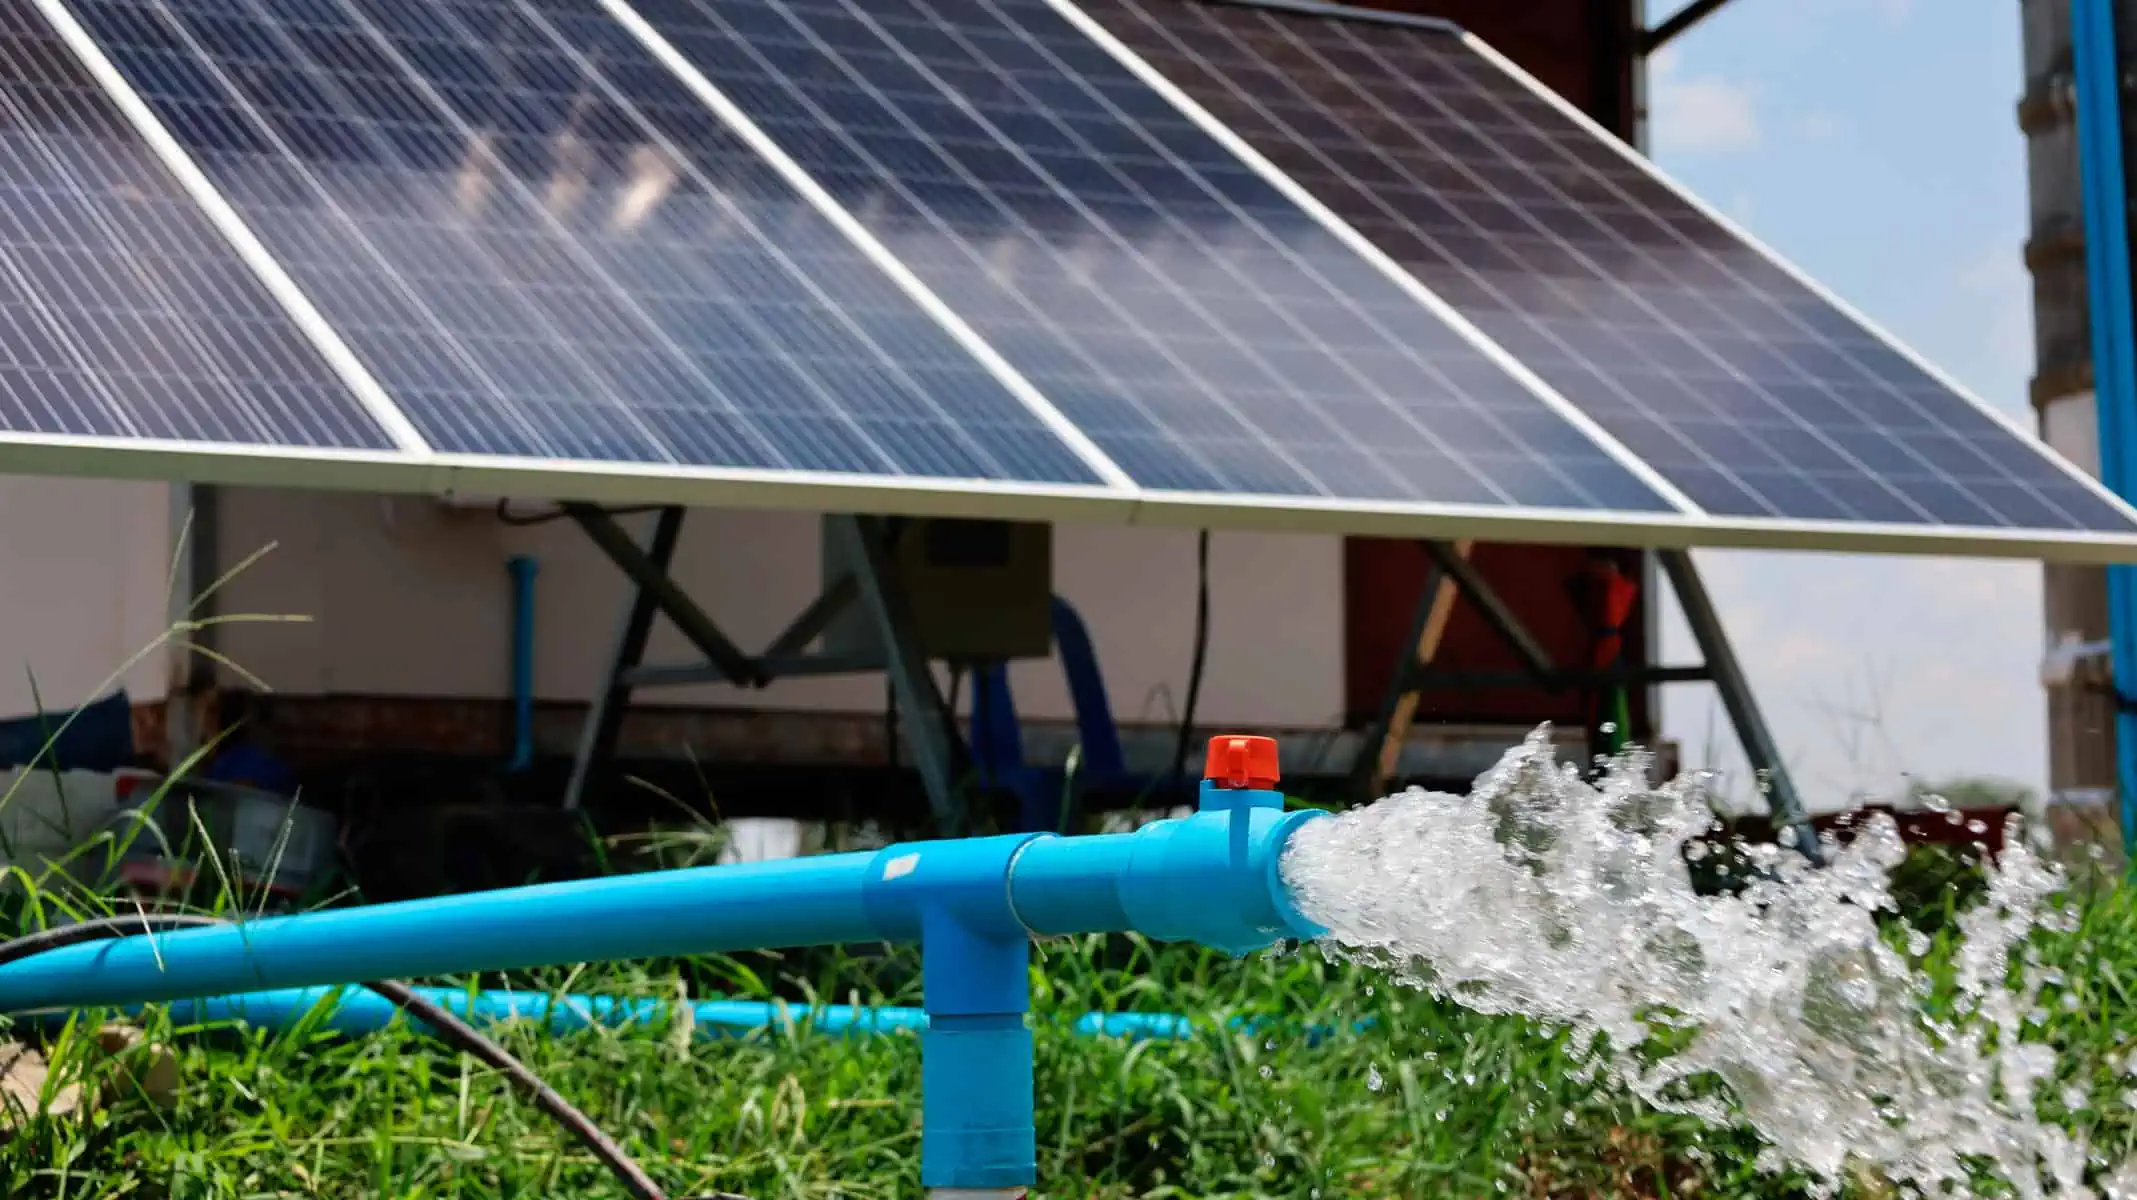 Implementan Nuevo Proyecto de Bombeo de Agua con Paneles Fotovoltaicos en Provincia Cubana